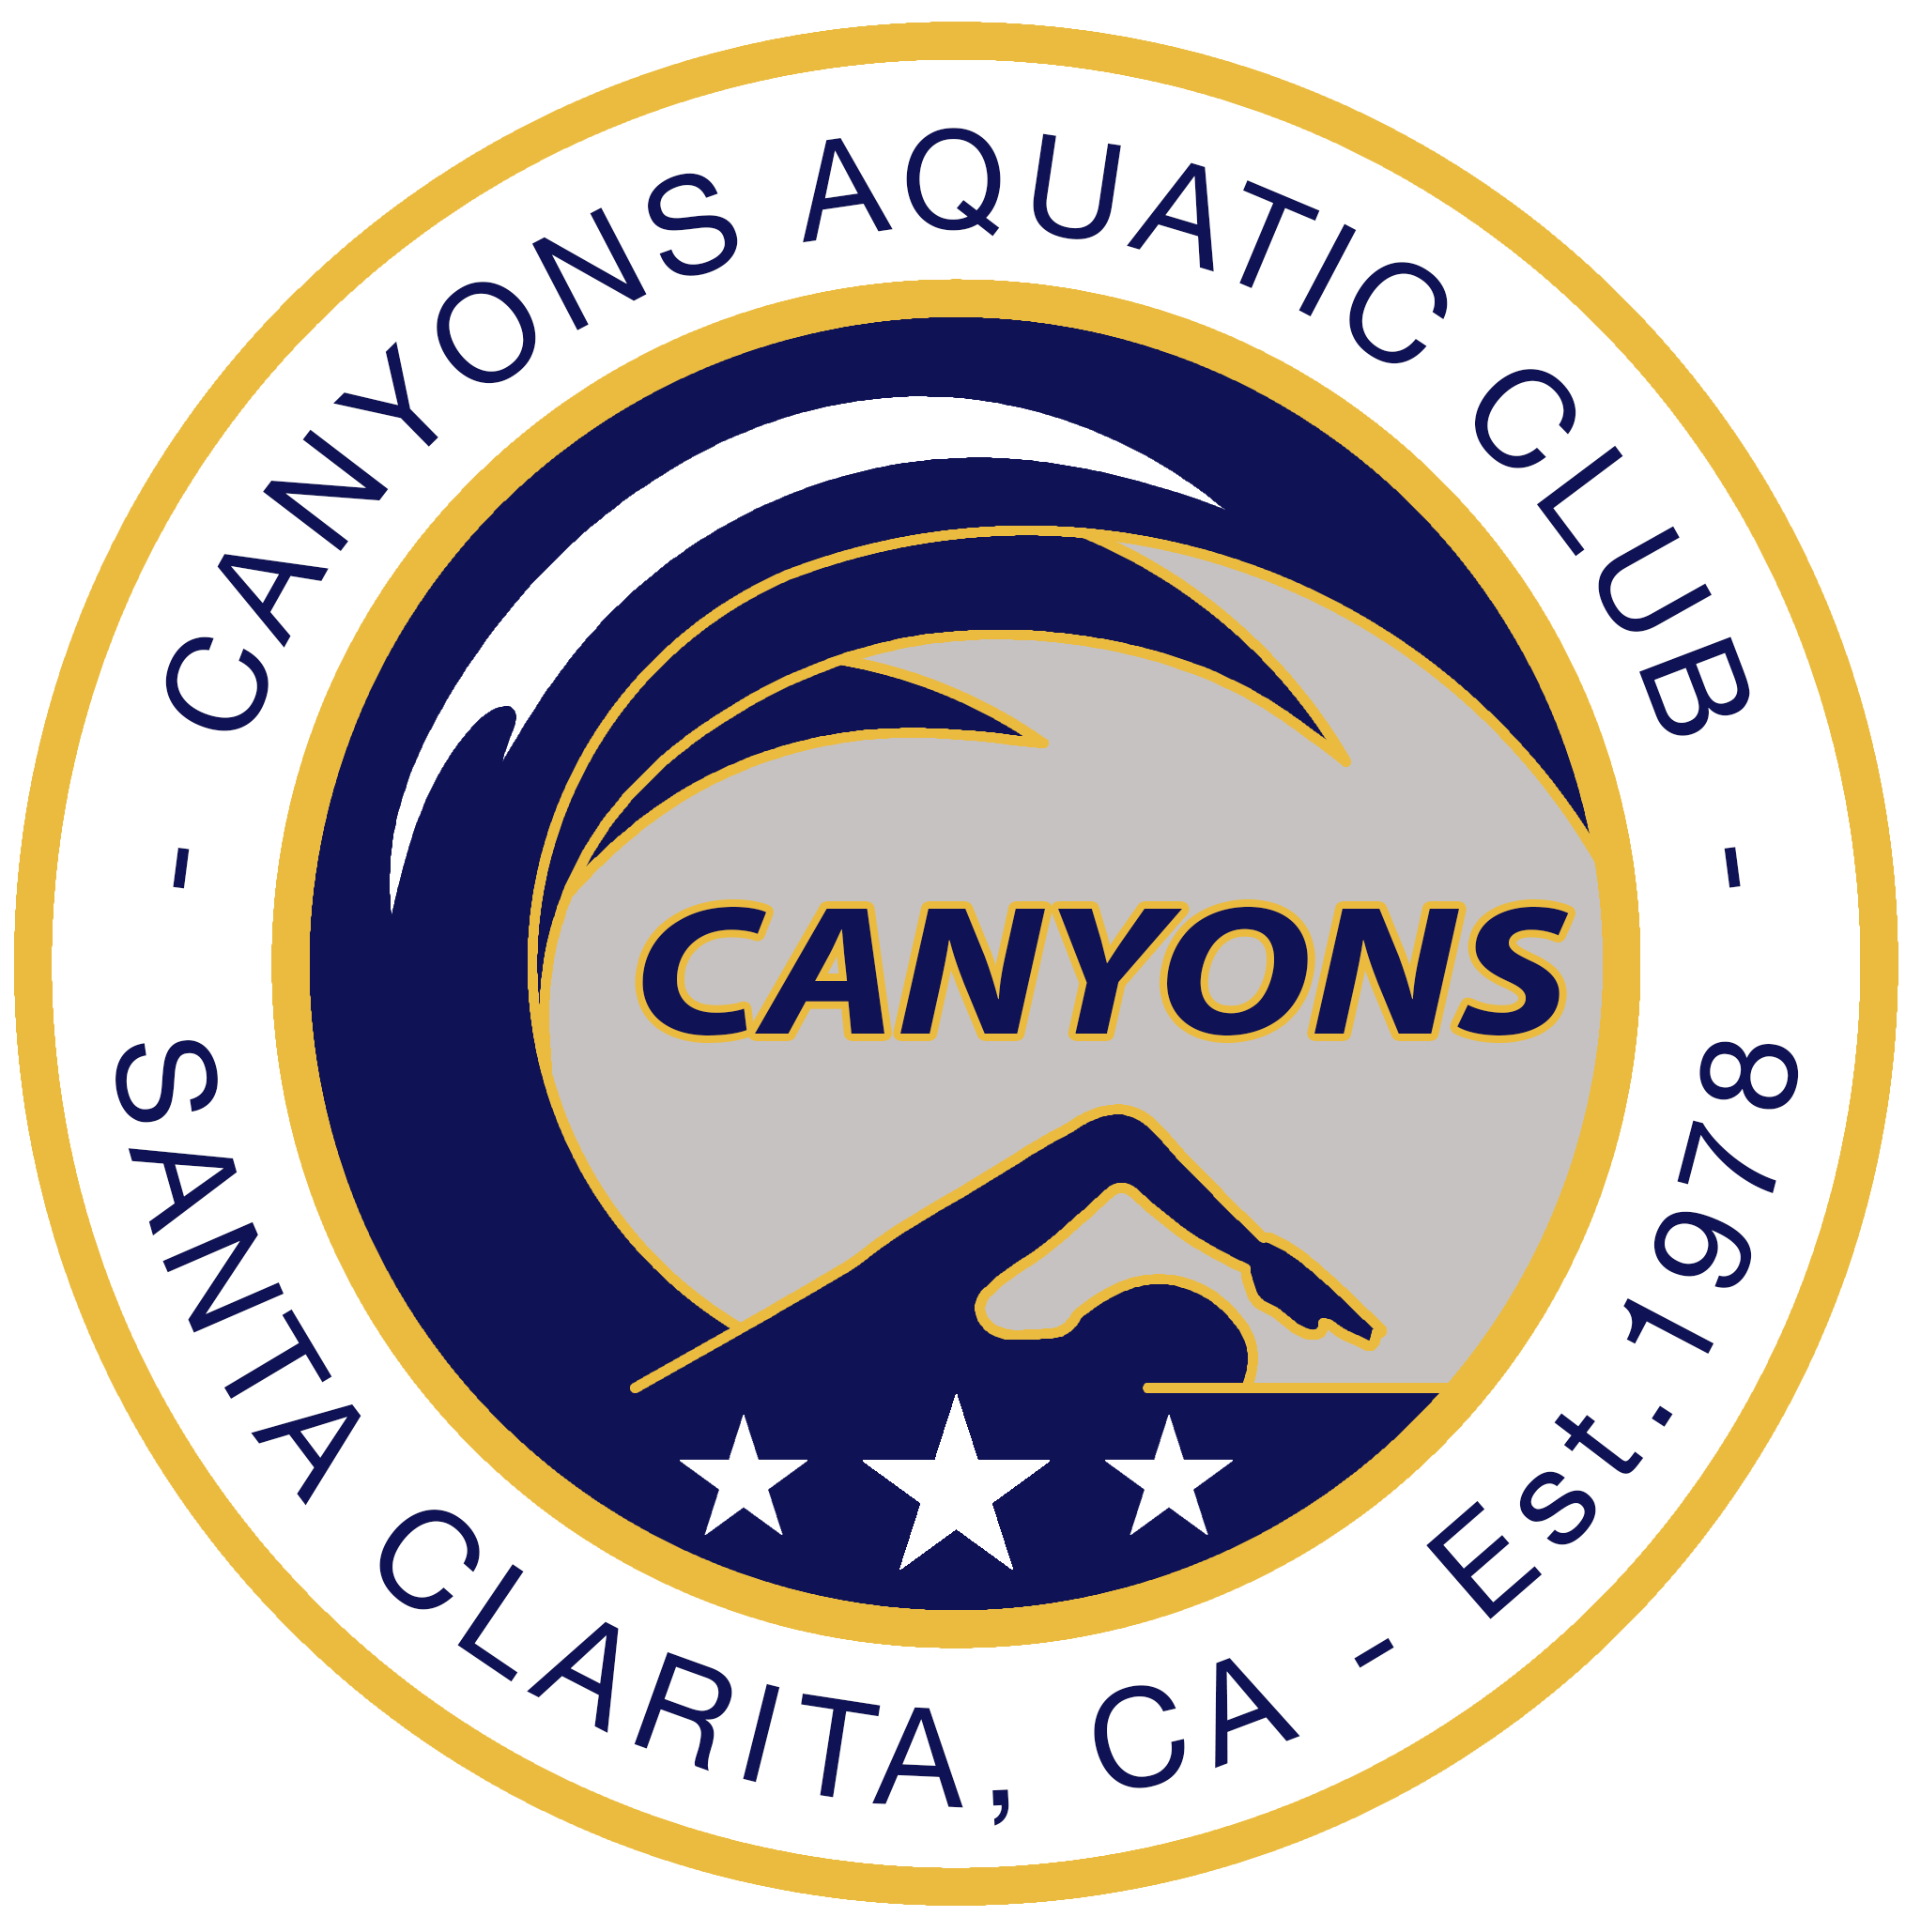 Canyons Aquatic Club logo